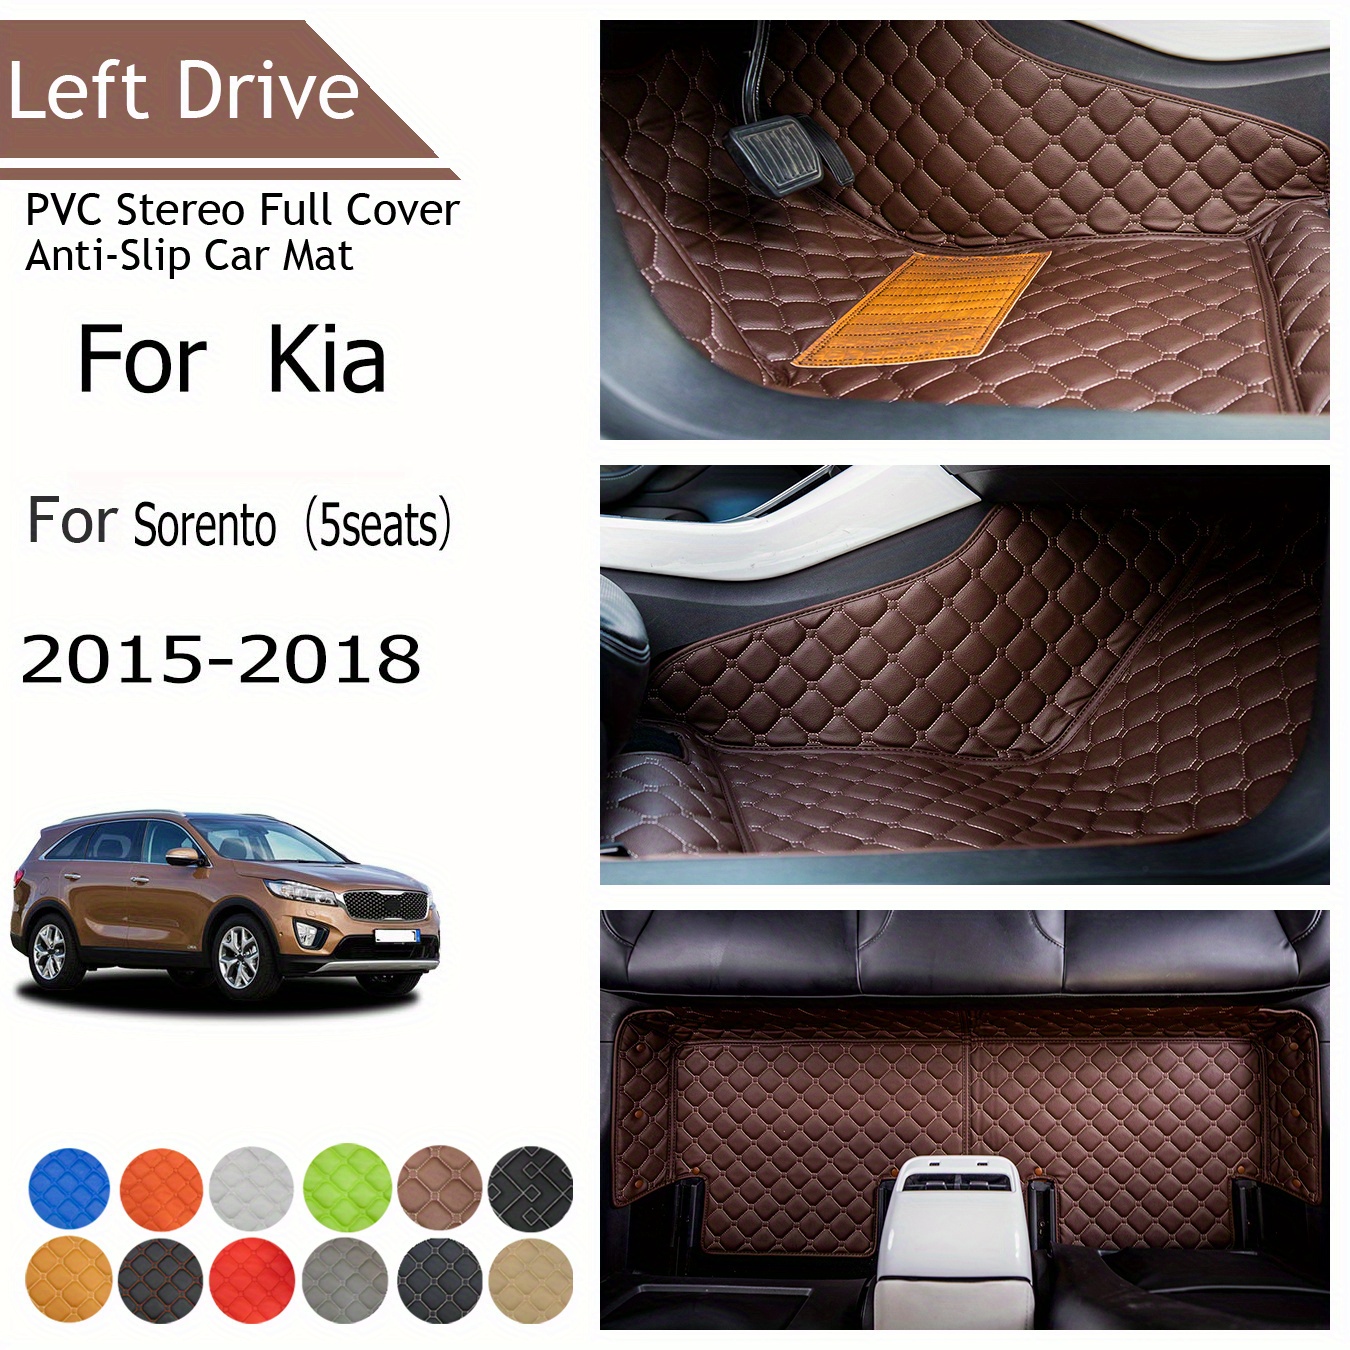 

Tegart [lhd]for Kia For Sorento (5seats) 2015-2018 3 Layer Pvc Stereo Full Cover Anti-slip Car Mat